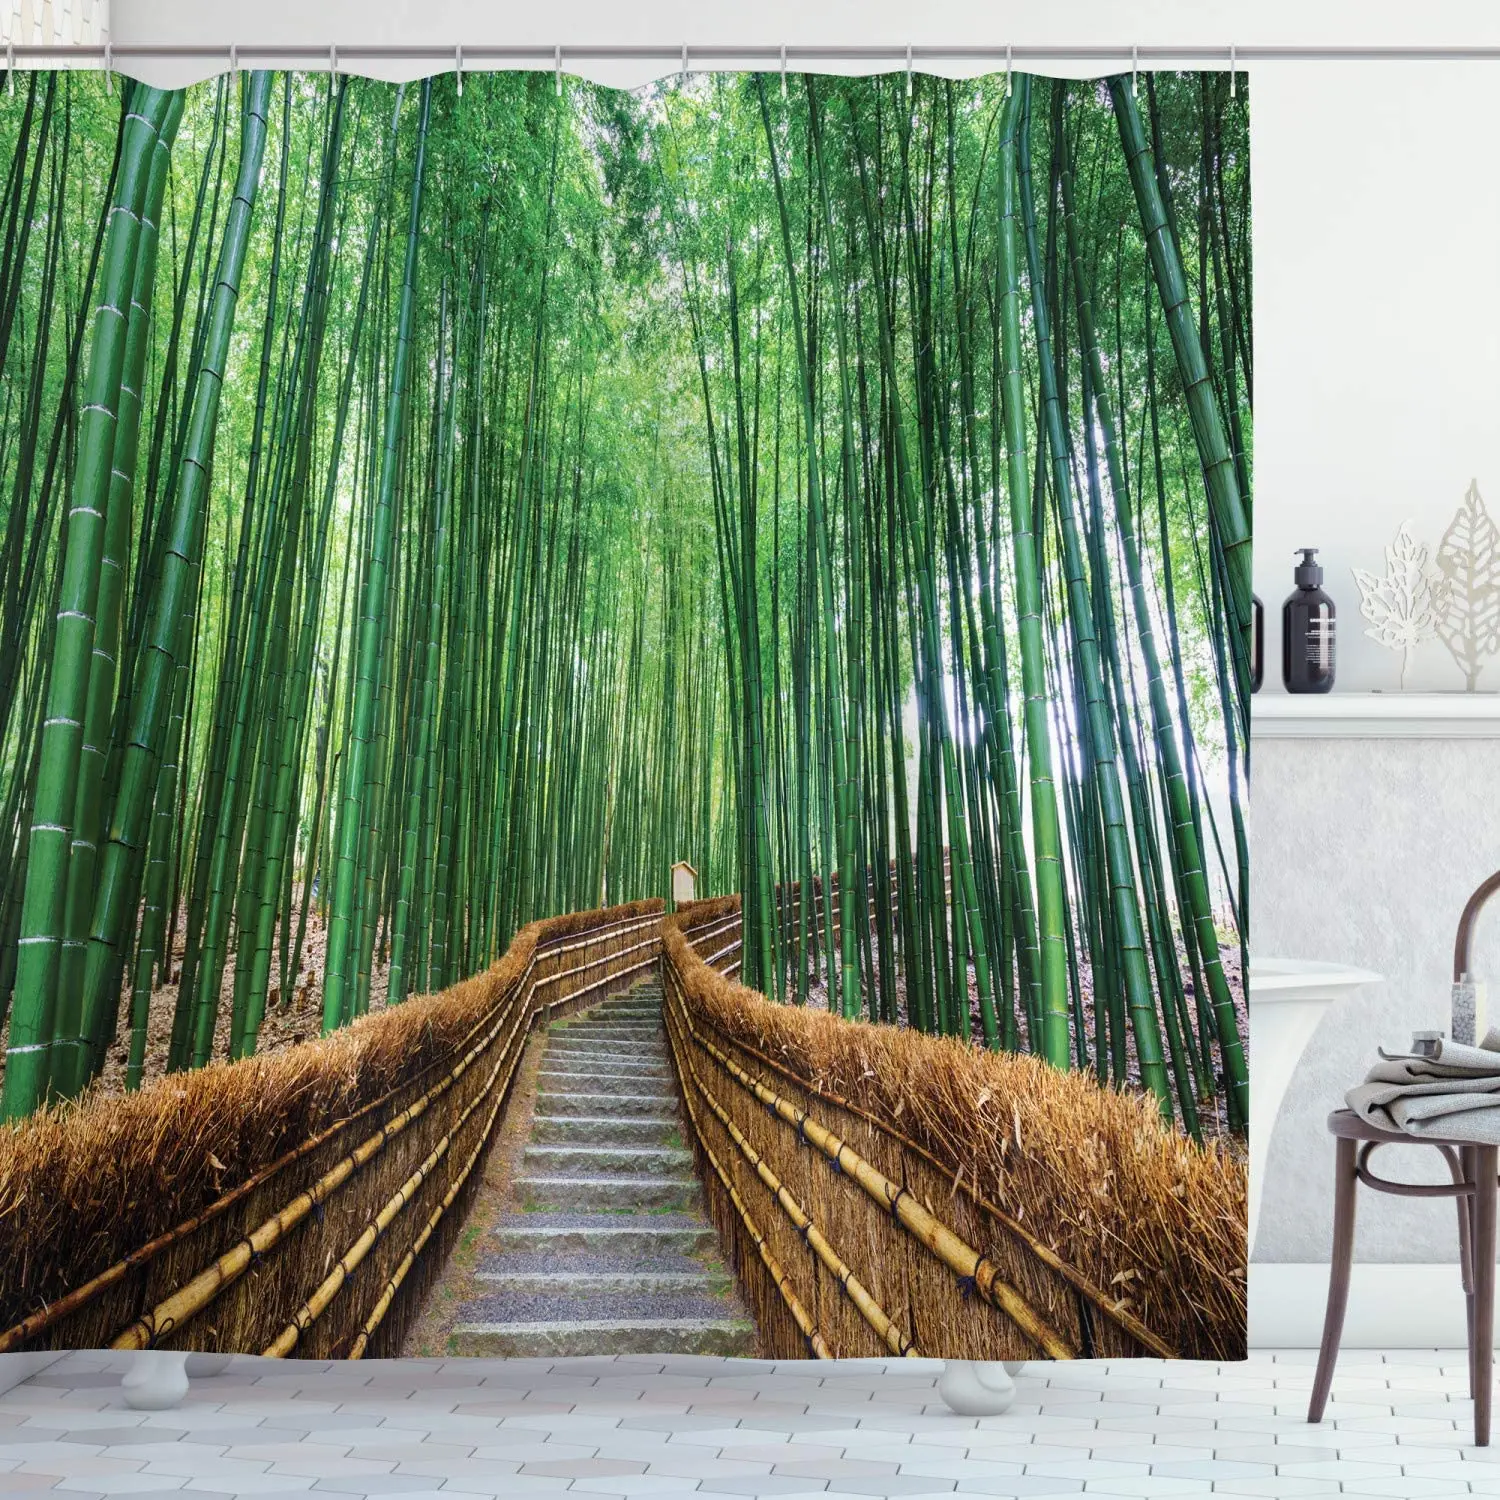 

Jungle Shower Curtain Tropical Nature Bridge Over Tree Bamboo Exotic Landscape Spa Yoga Design Cloth Fabric Bathroom Decor Set